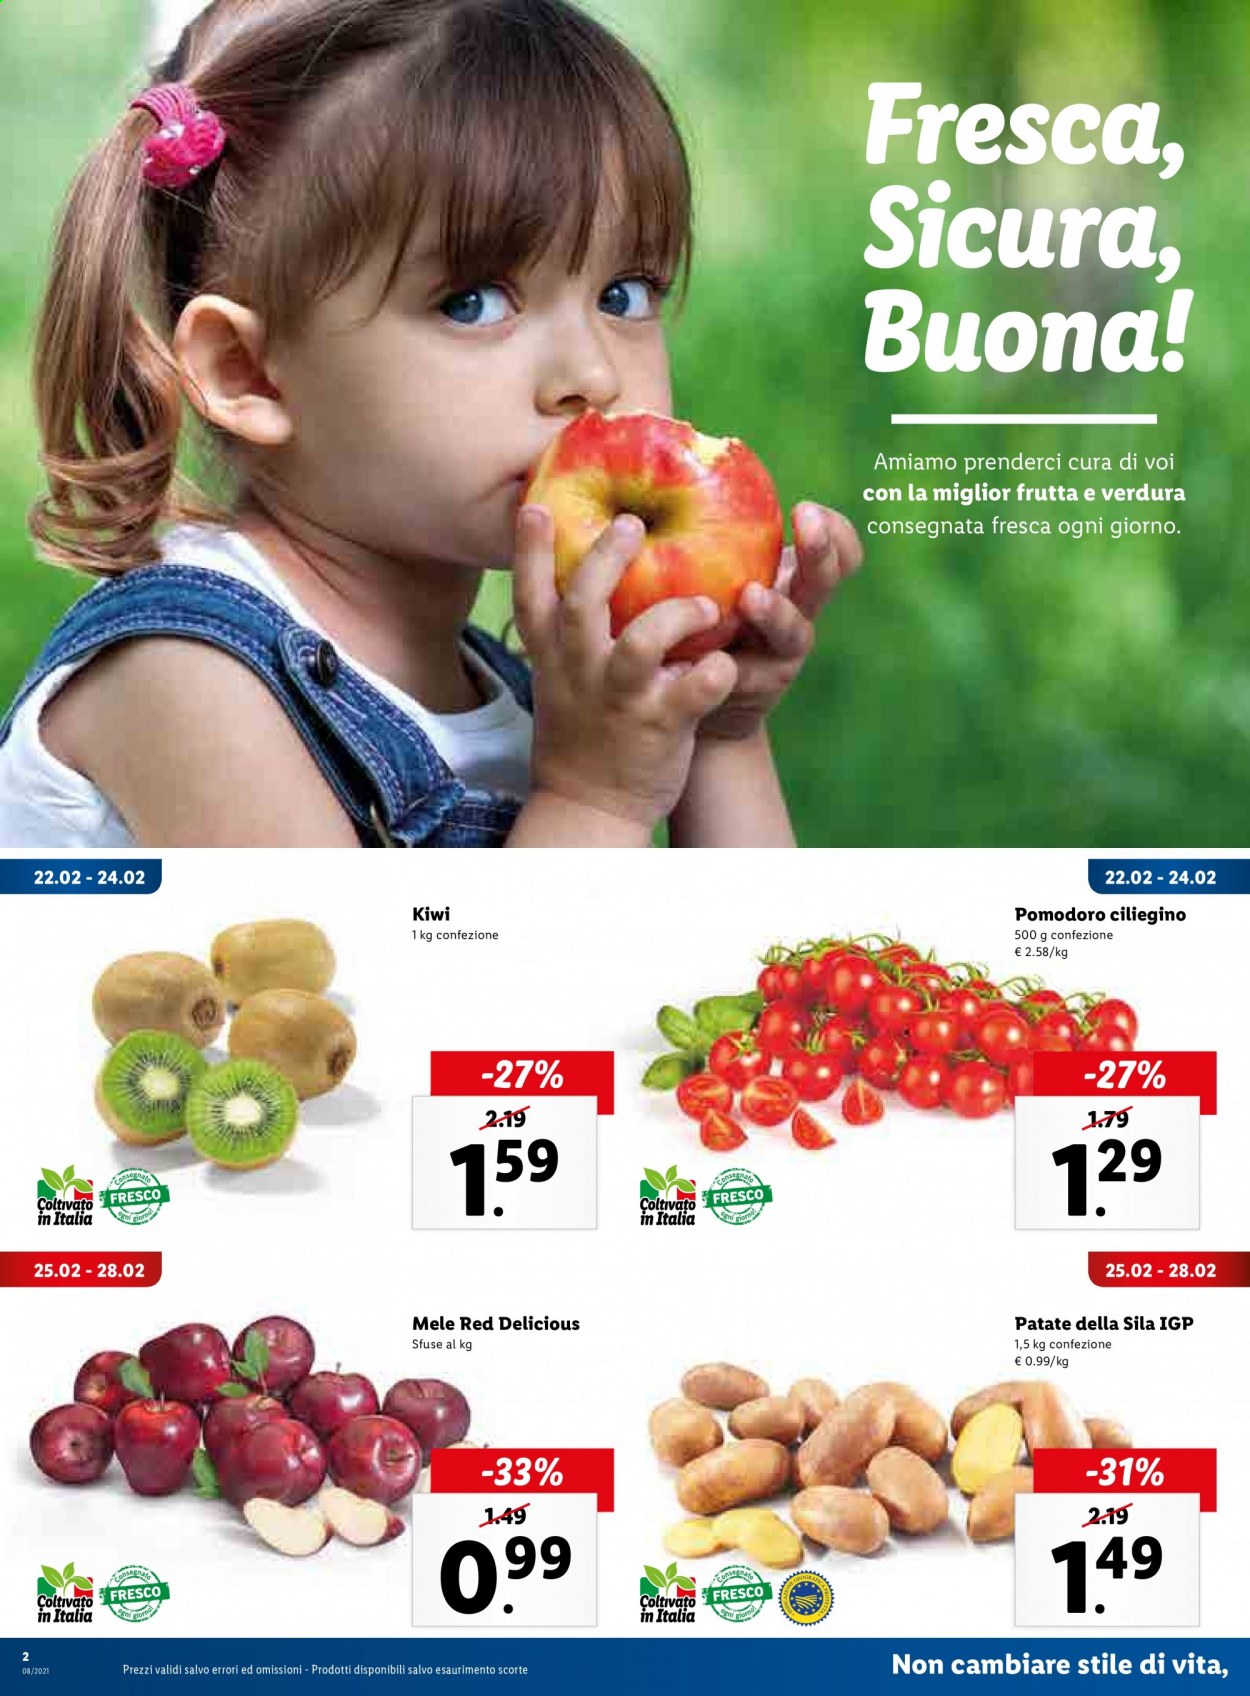 thumbnail - Volantino Lidl - 18/2/2021 - 28/2/2021 - Prodotti in offerta - patate, pomodorini, pomodori, mele, Red Delicious, kiwi. Pagina 2.